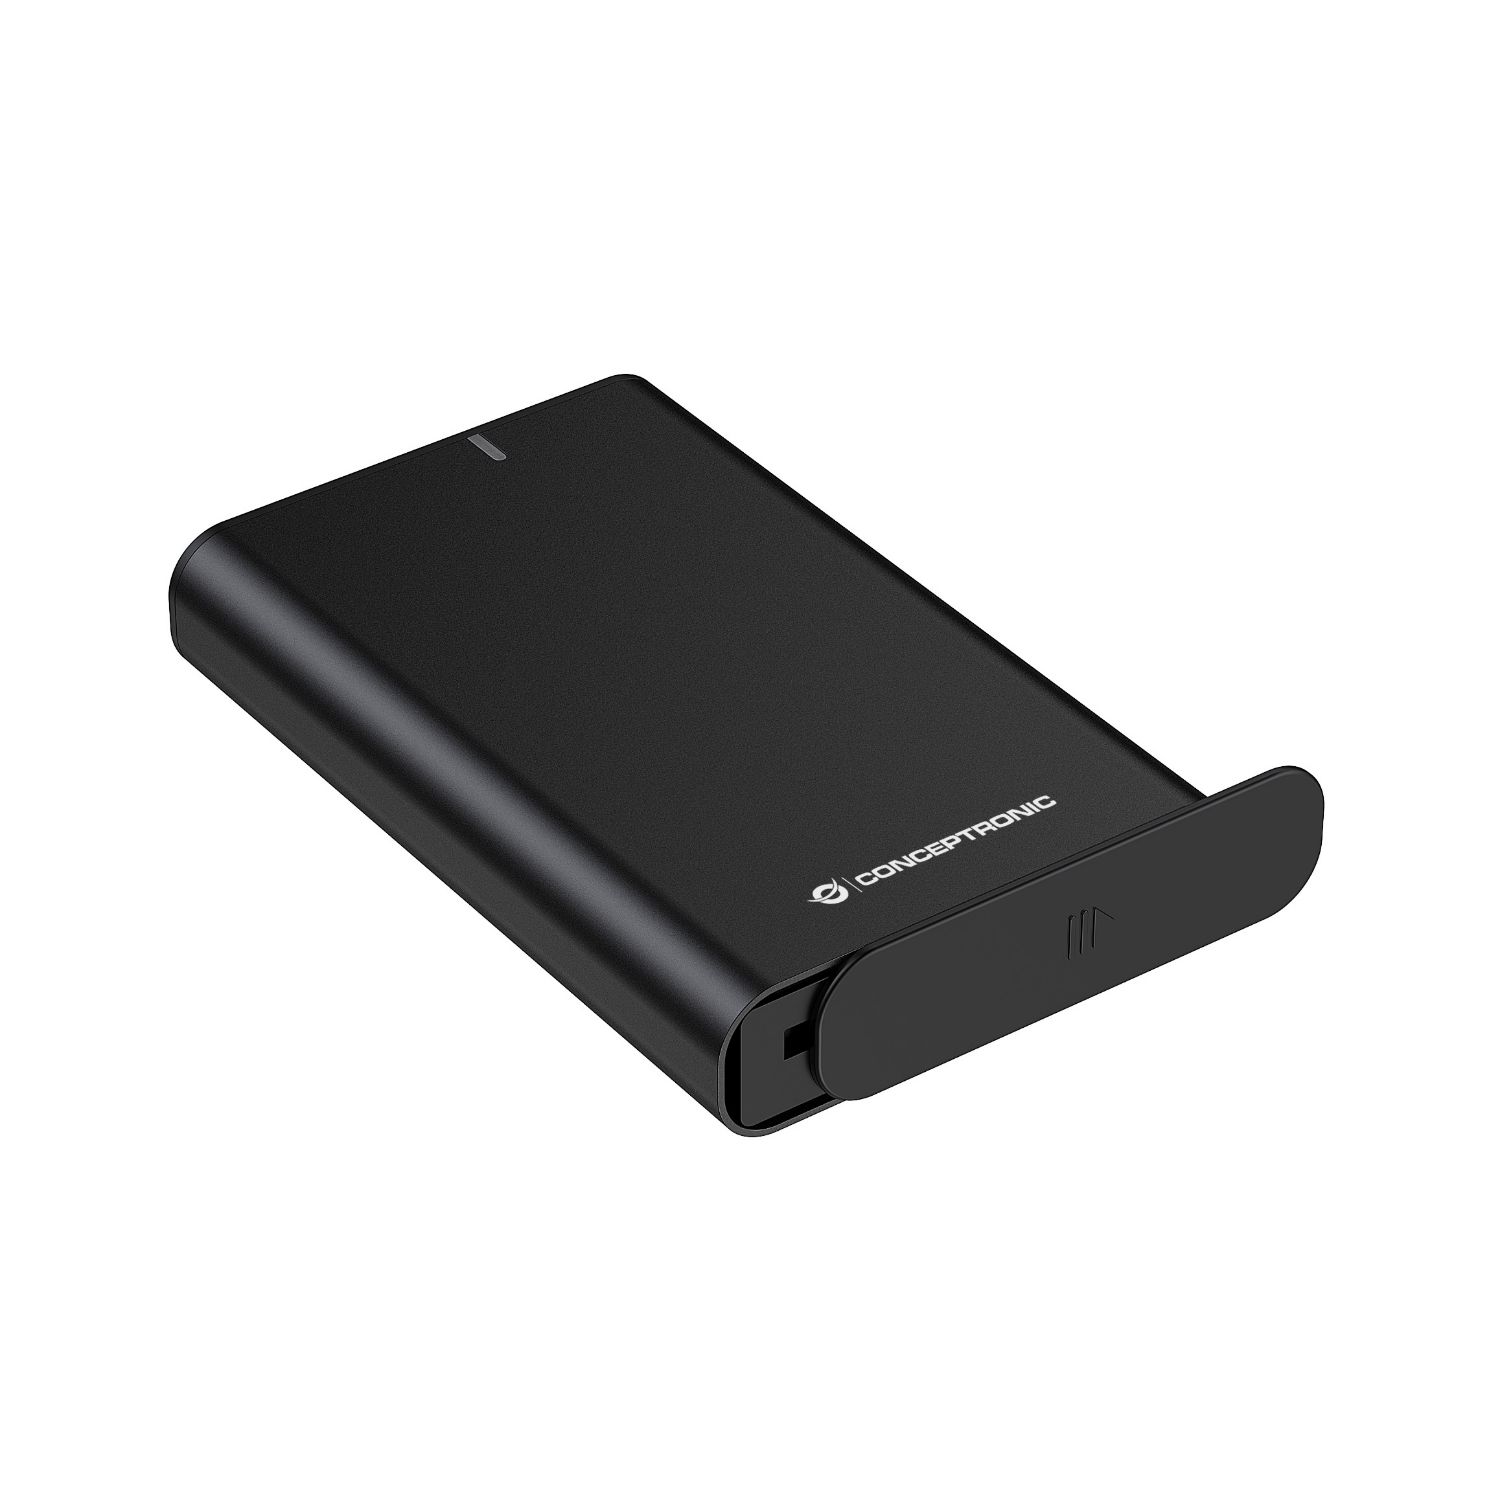 DANTE02B - Caja CONCEPTRONIC SSD/HD 2.5